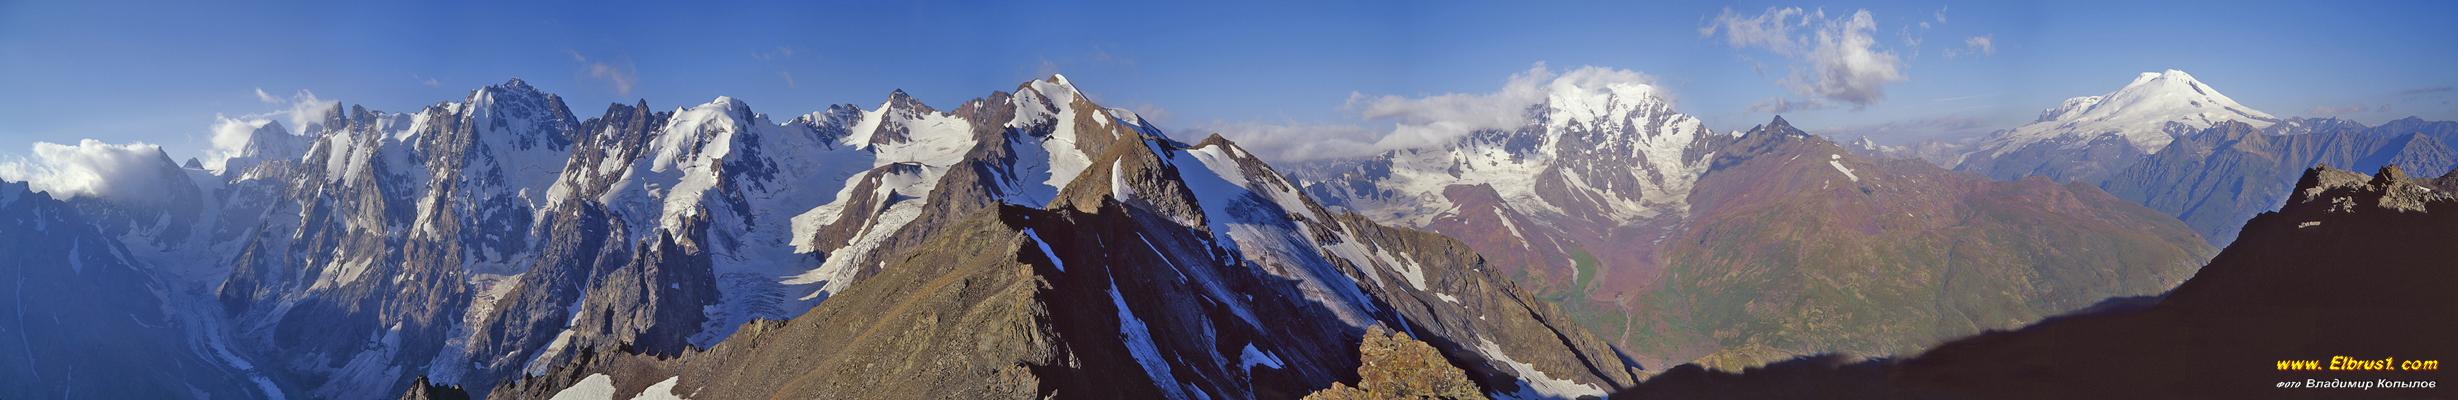 http://www.mountain.ru/photo/autors_photo/kopylov/ushba/panorama.jpg